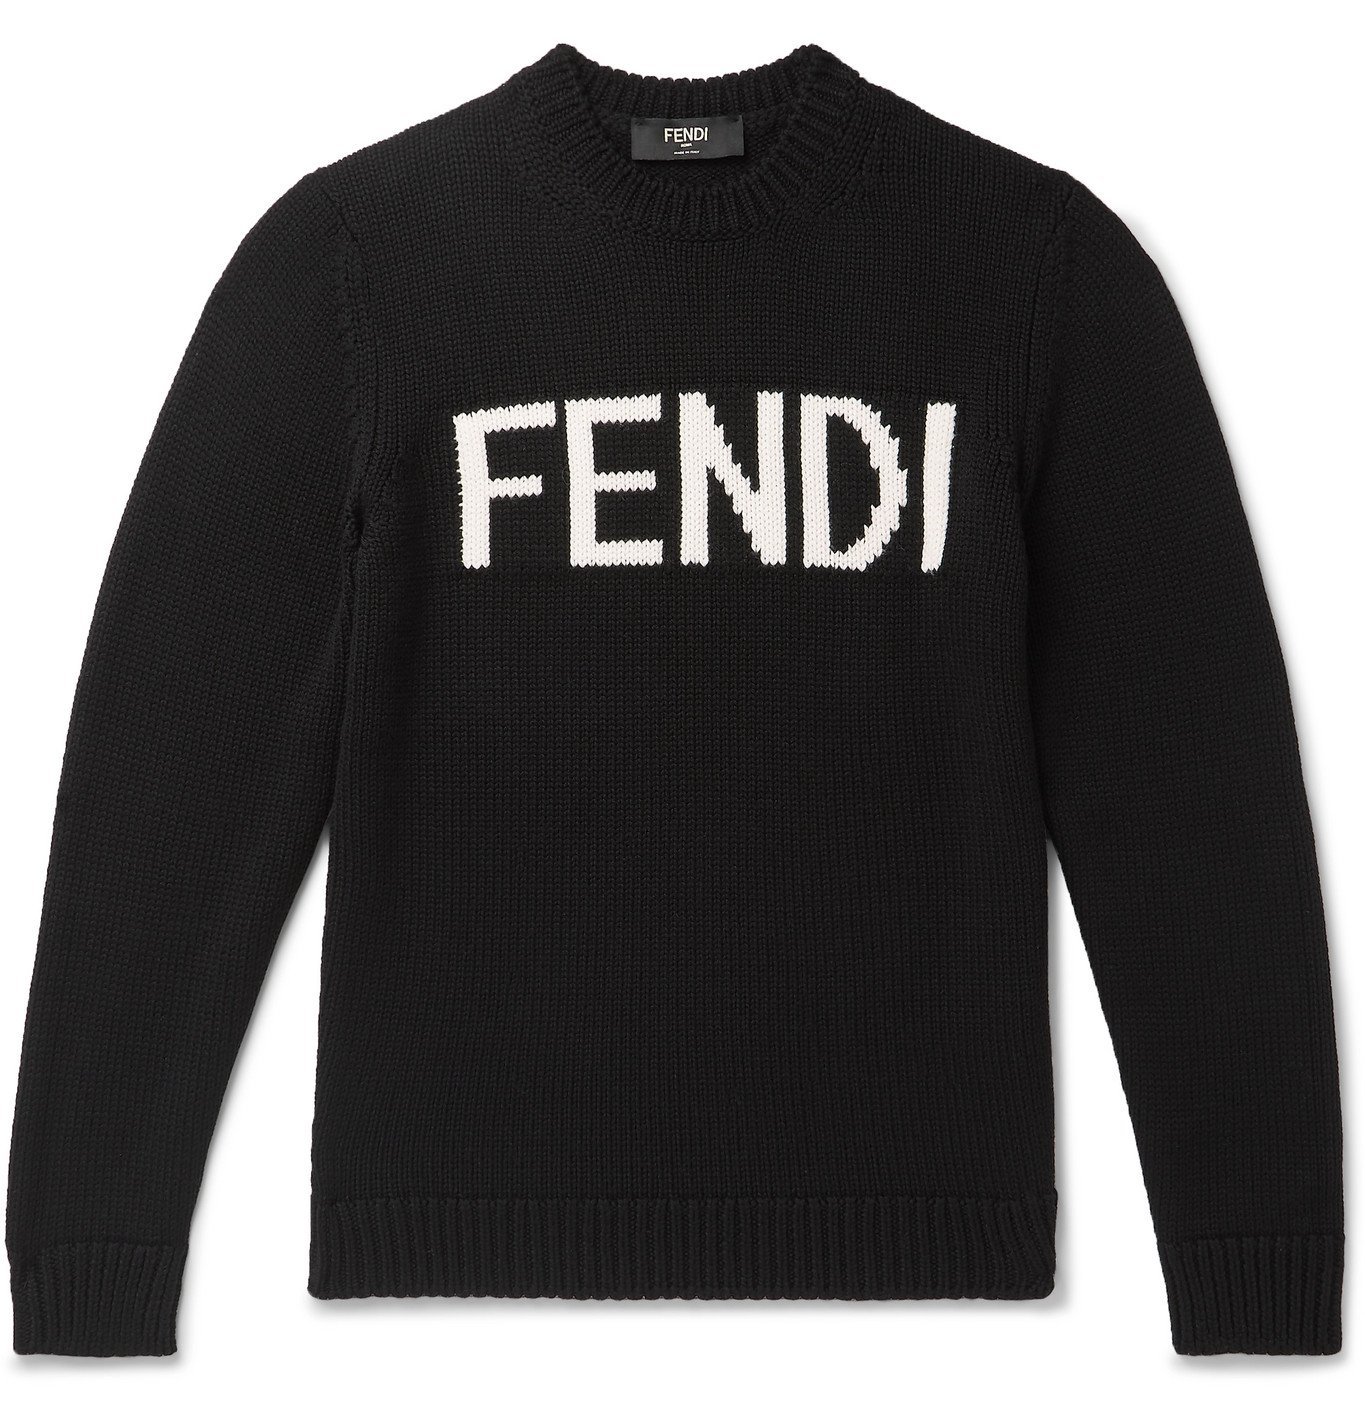 Fendi - Logo-Intarsia Wool Sweater - Black Fendi